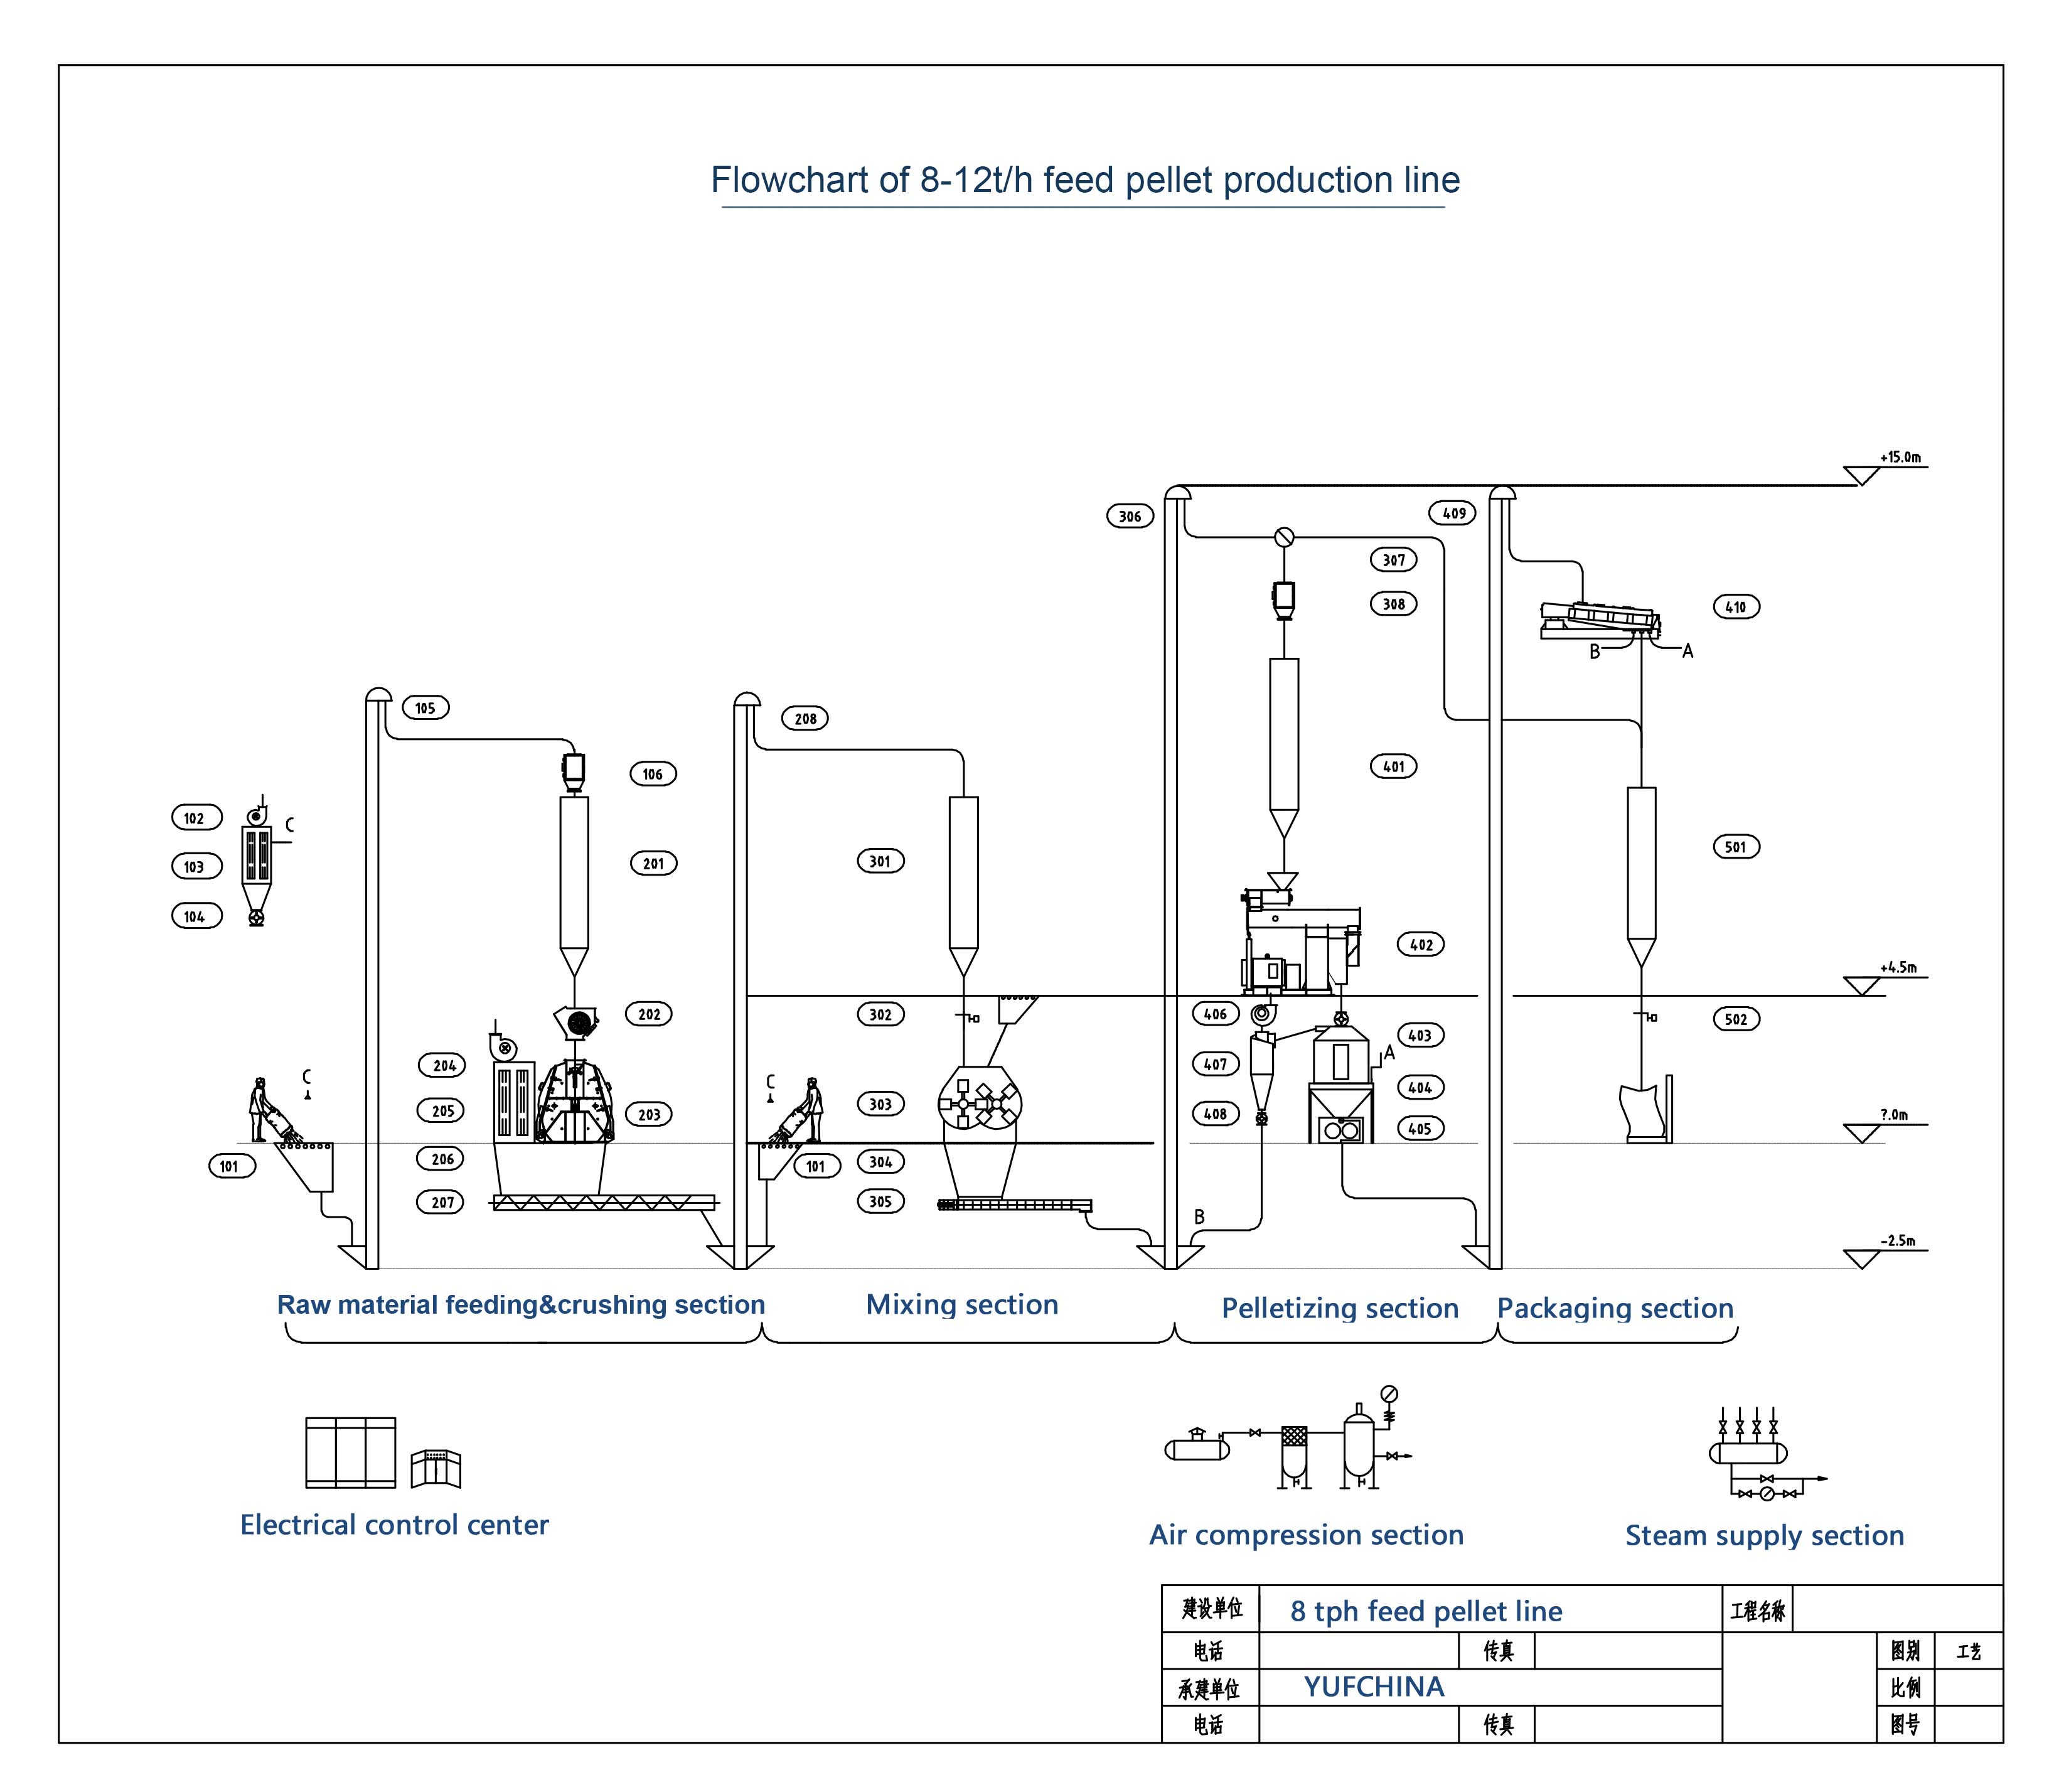 Flowchart of 8-10t/h feed pellet production line